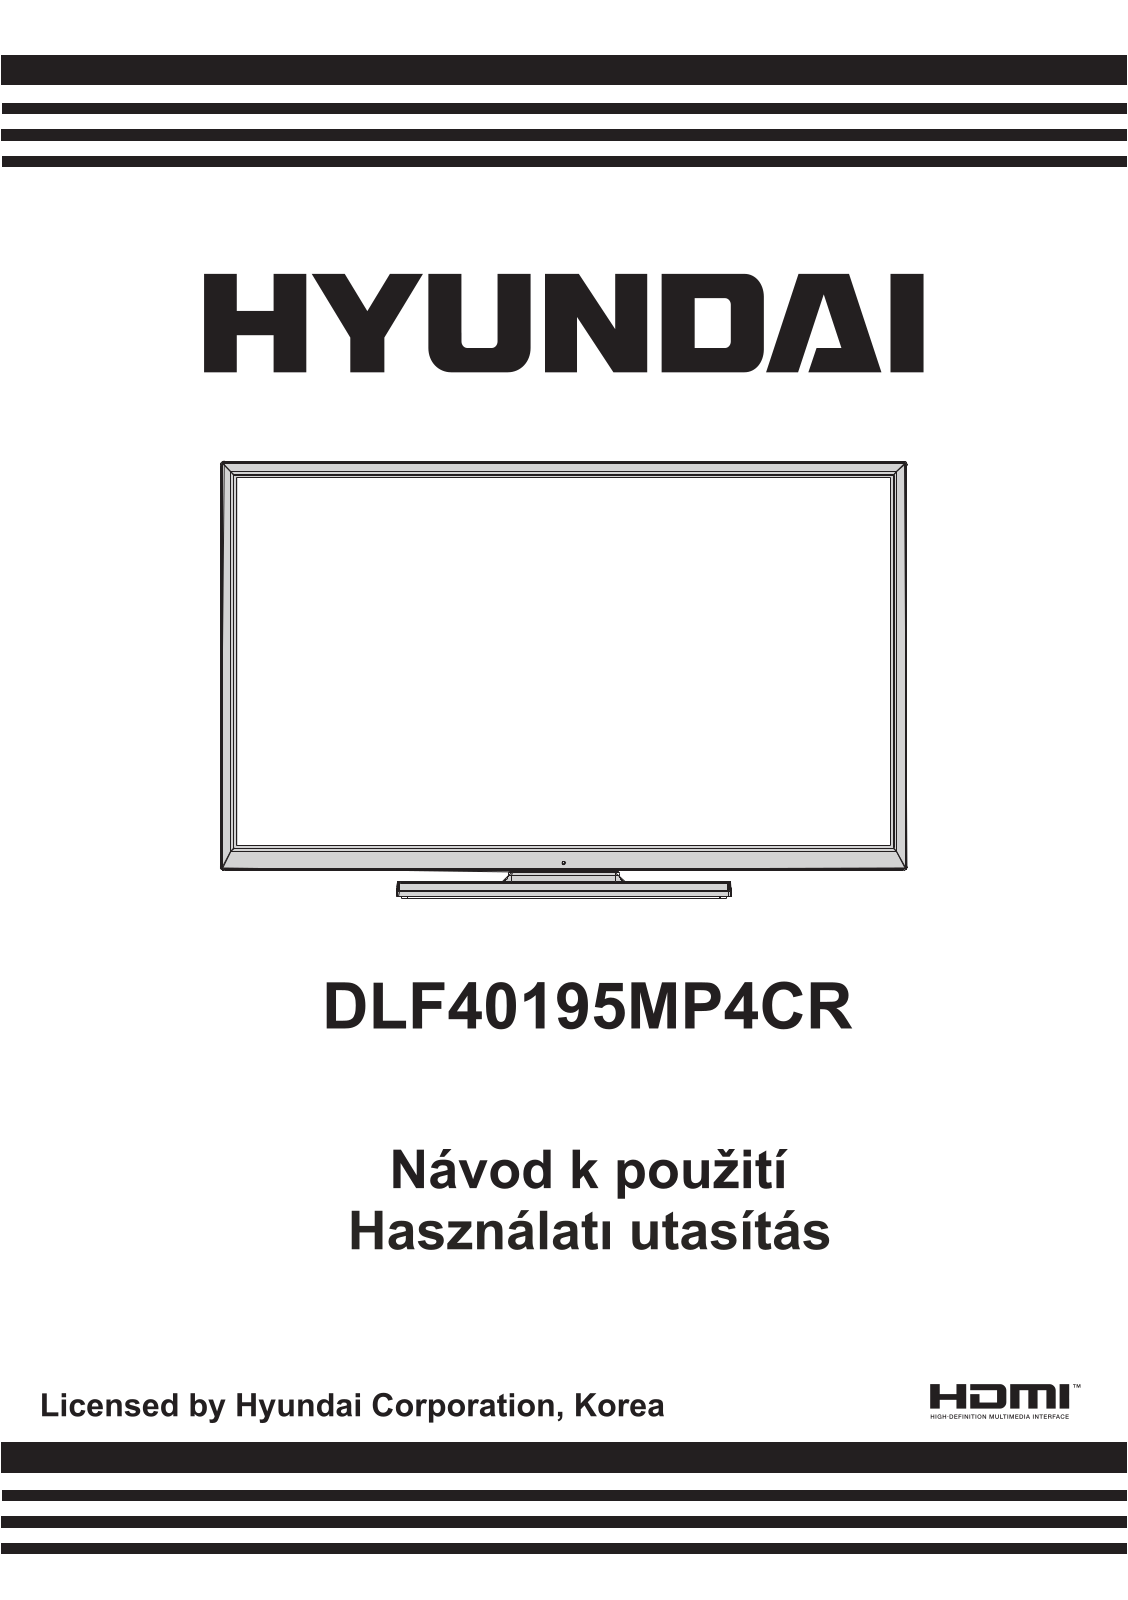 Hyundai DLF 40195 MP4CR User Manual